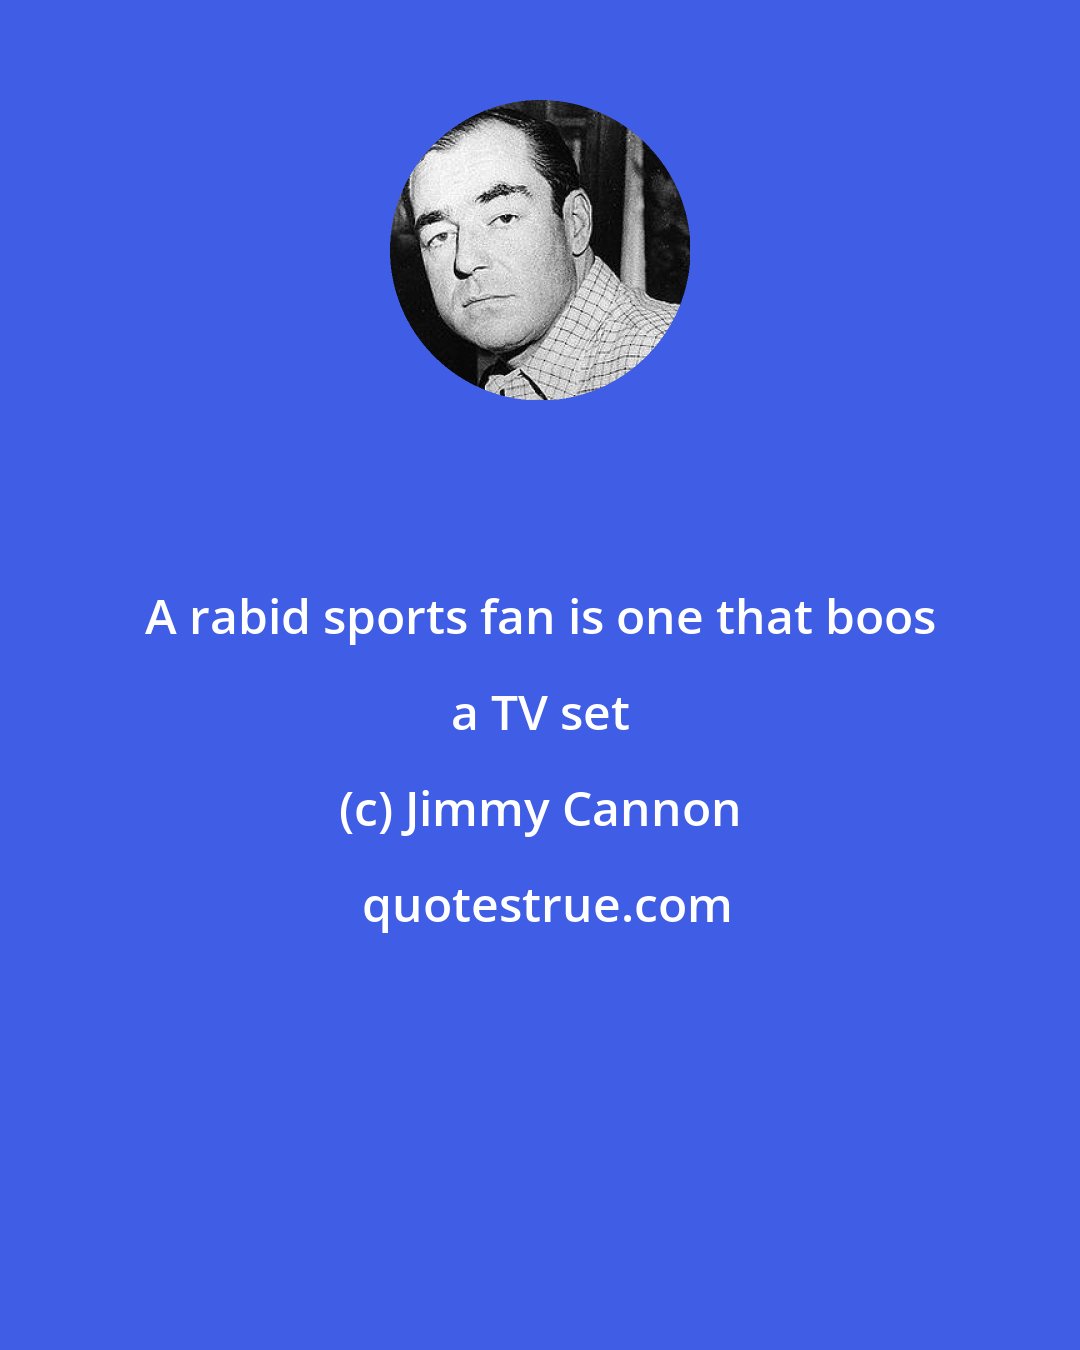 Jimmy Cannon: A rabid sports fan is one that boos a TV set